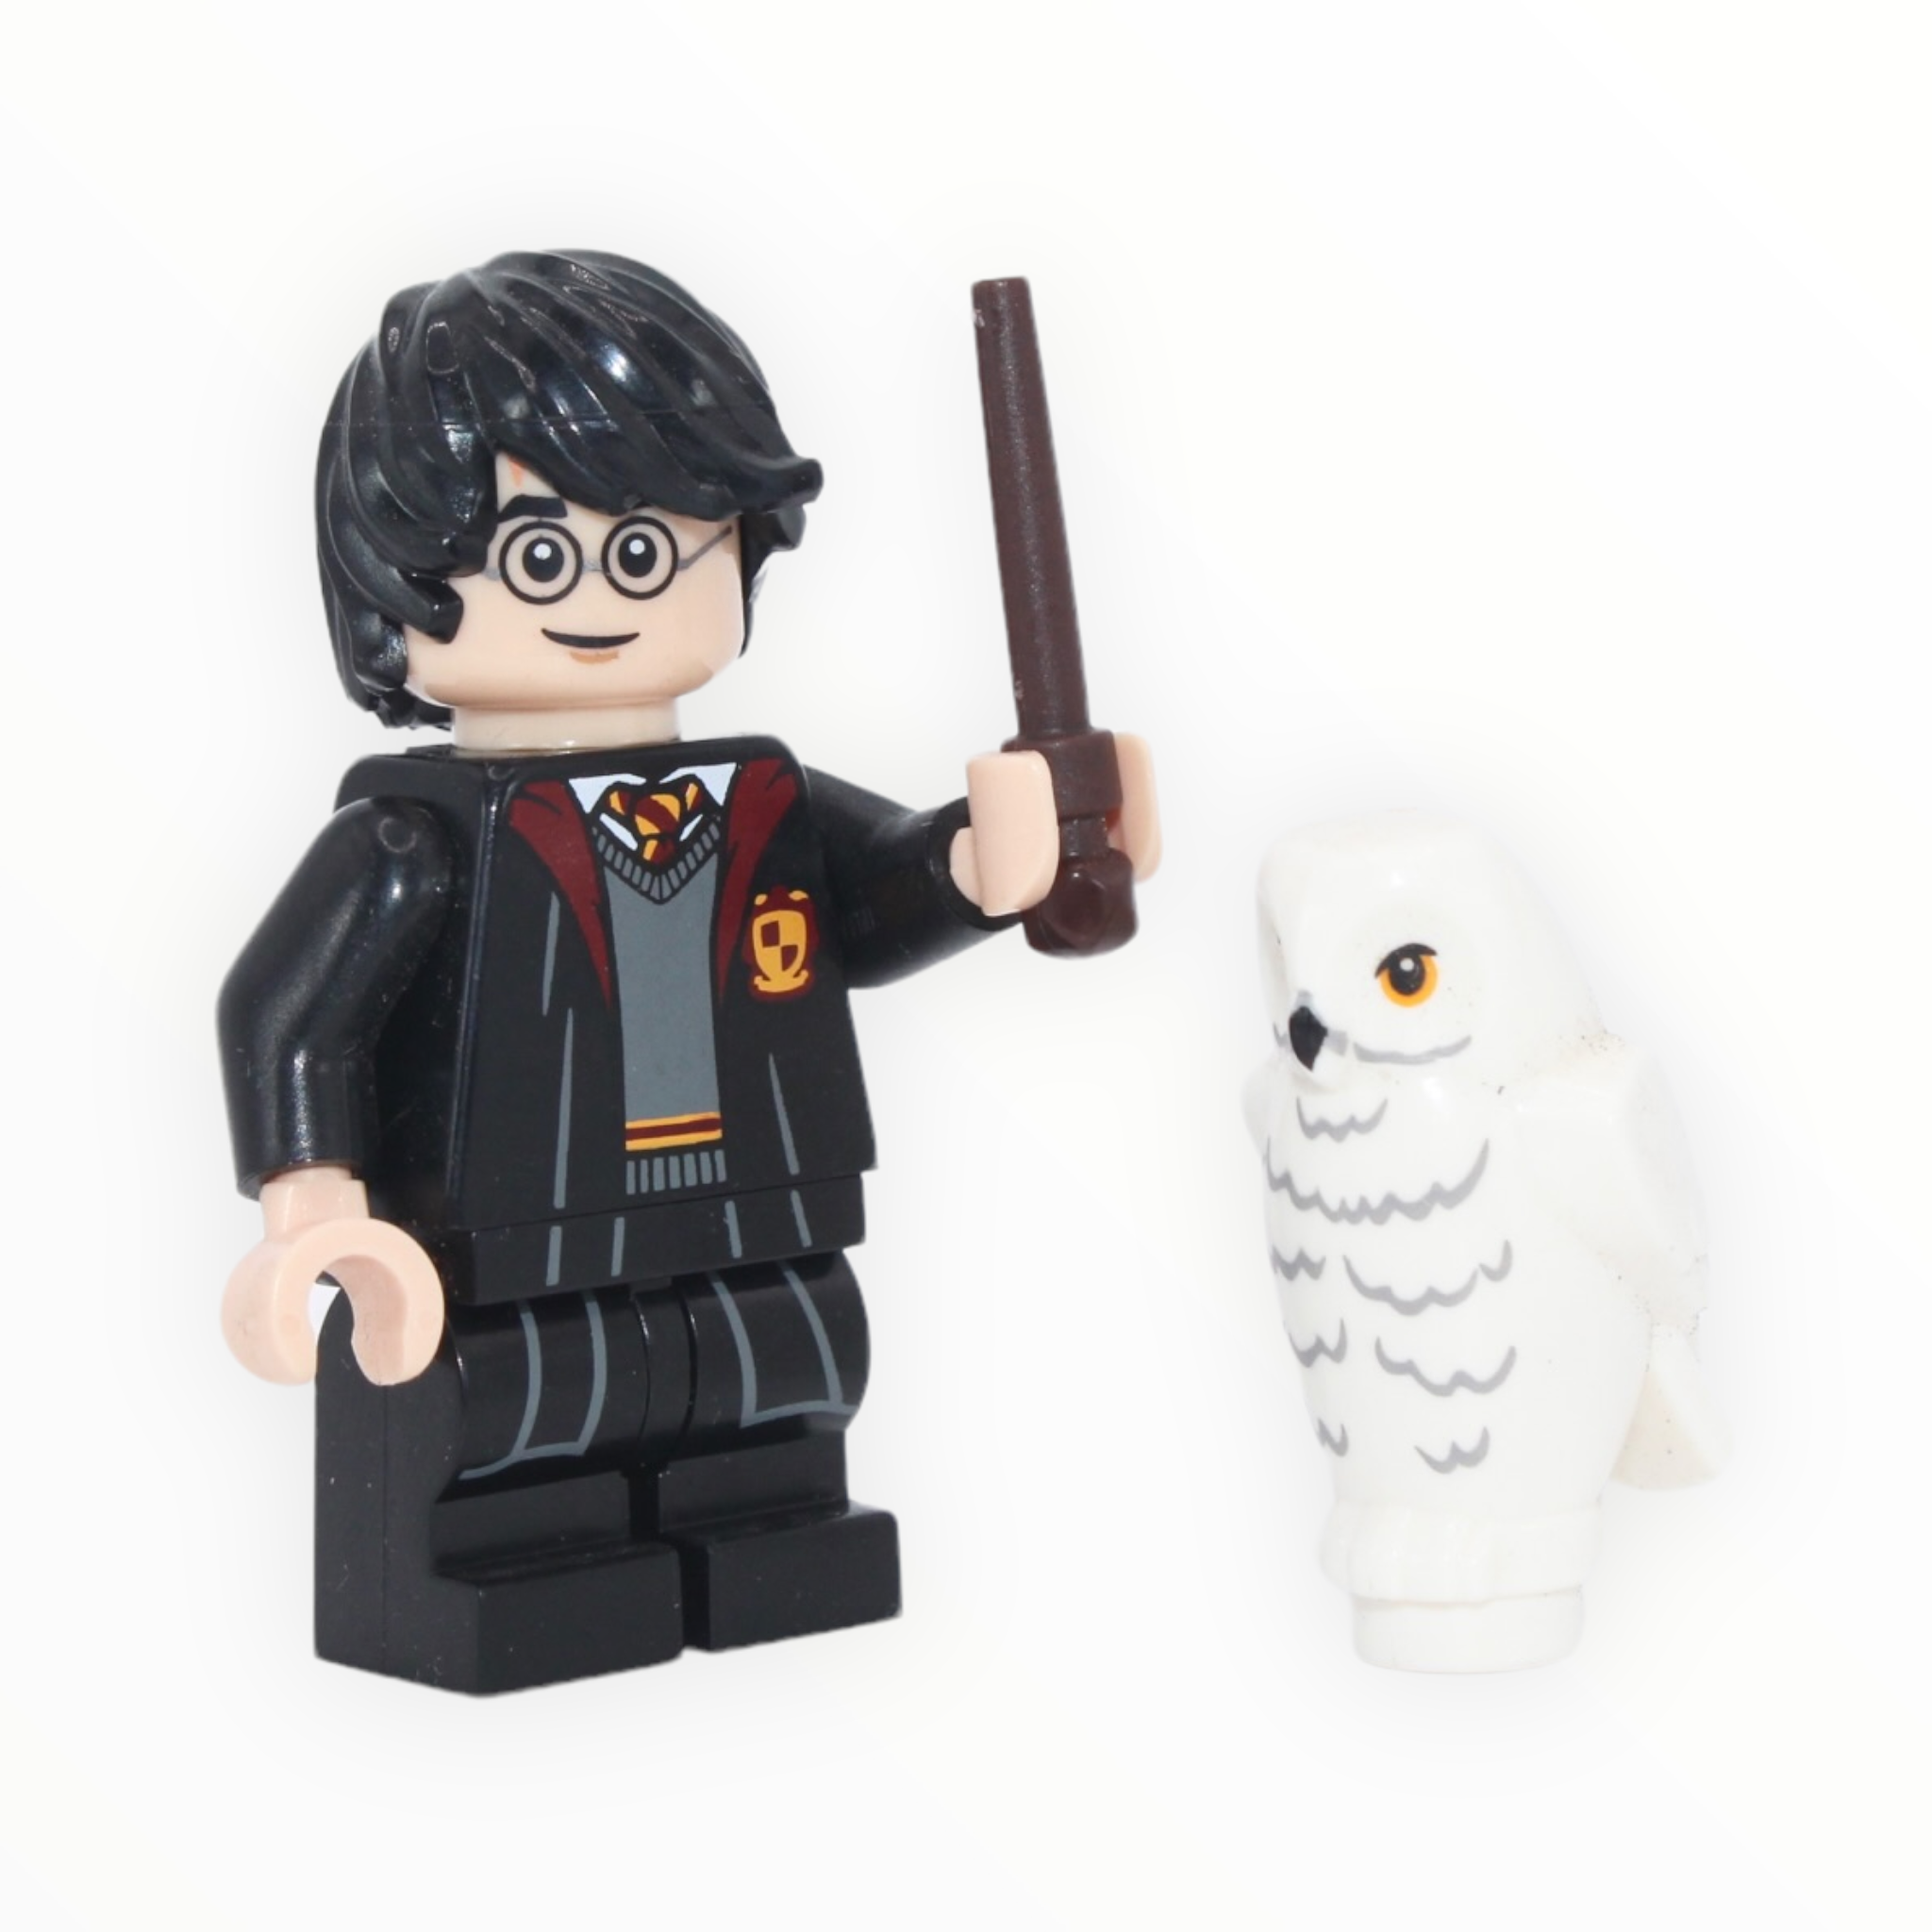 Harry Potter Series: Harry Potter in School Robes